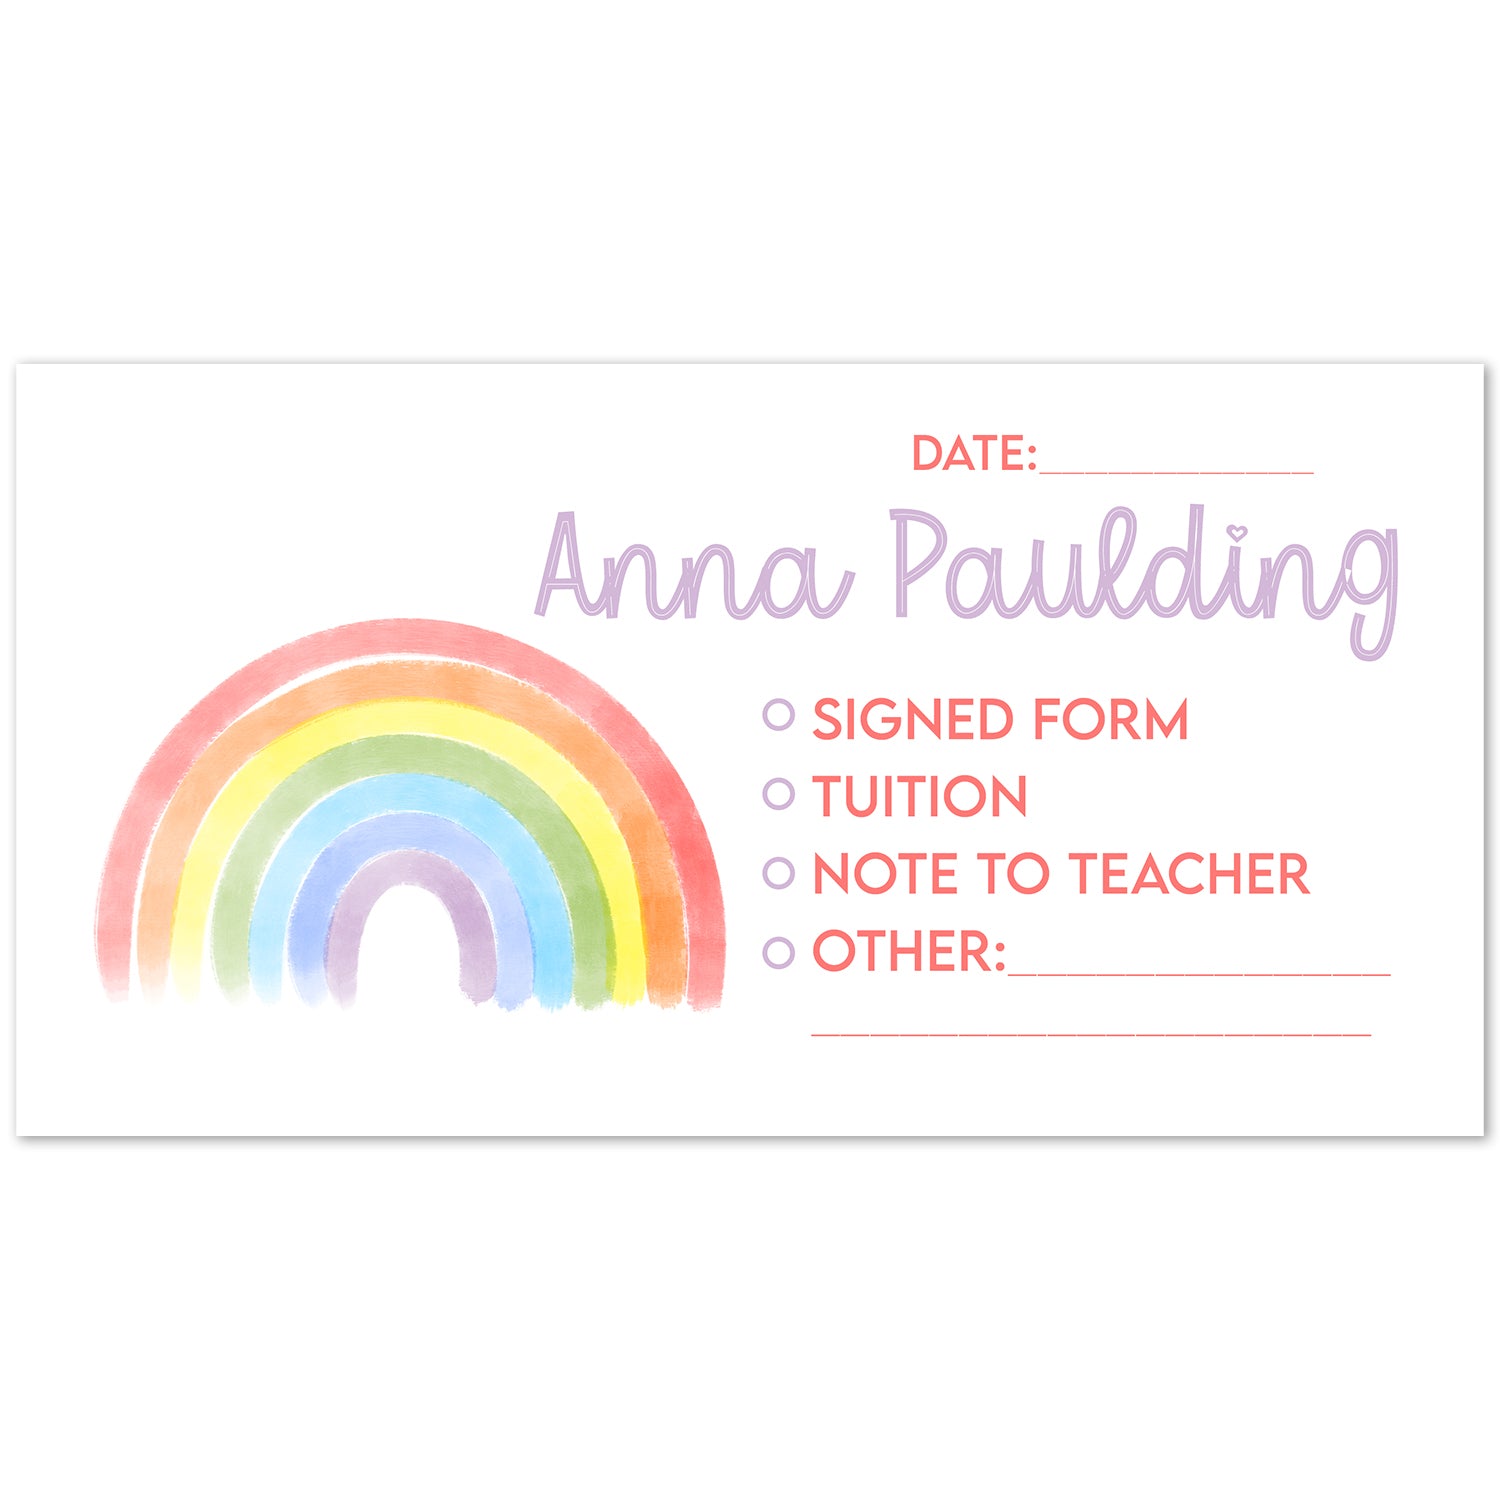 Rainbow Personalized School Envelopes, 20 Count